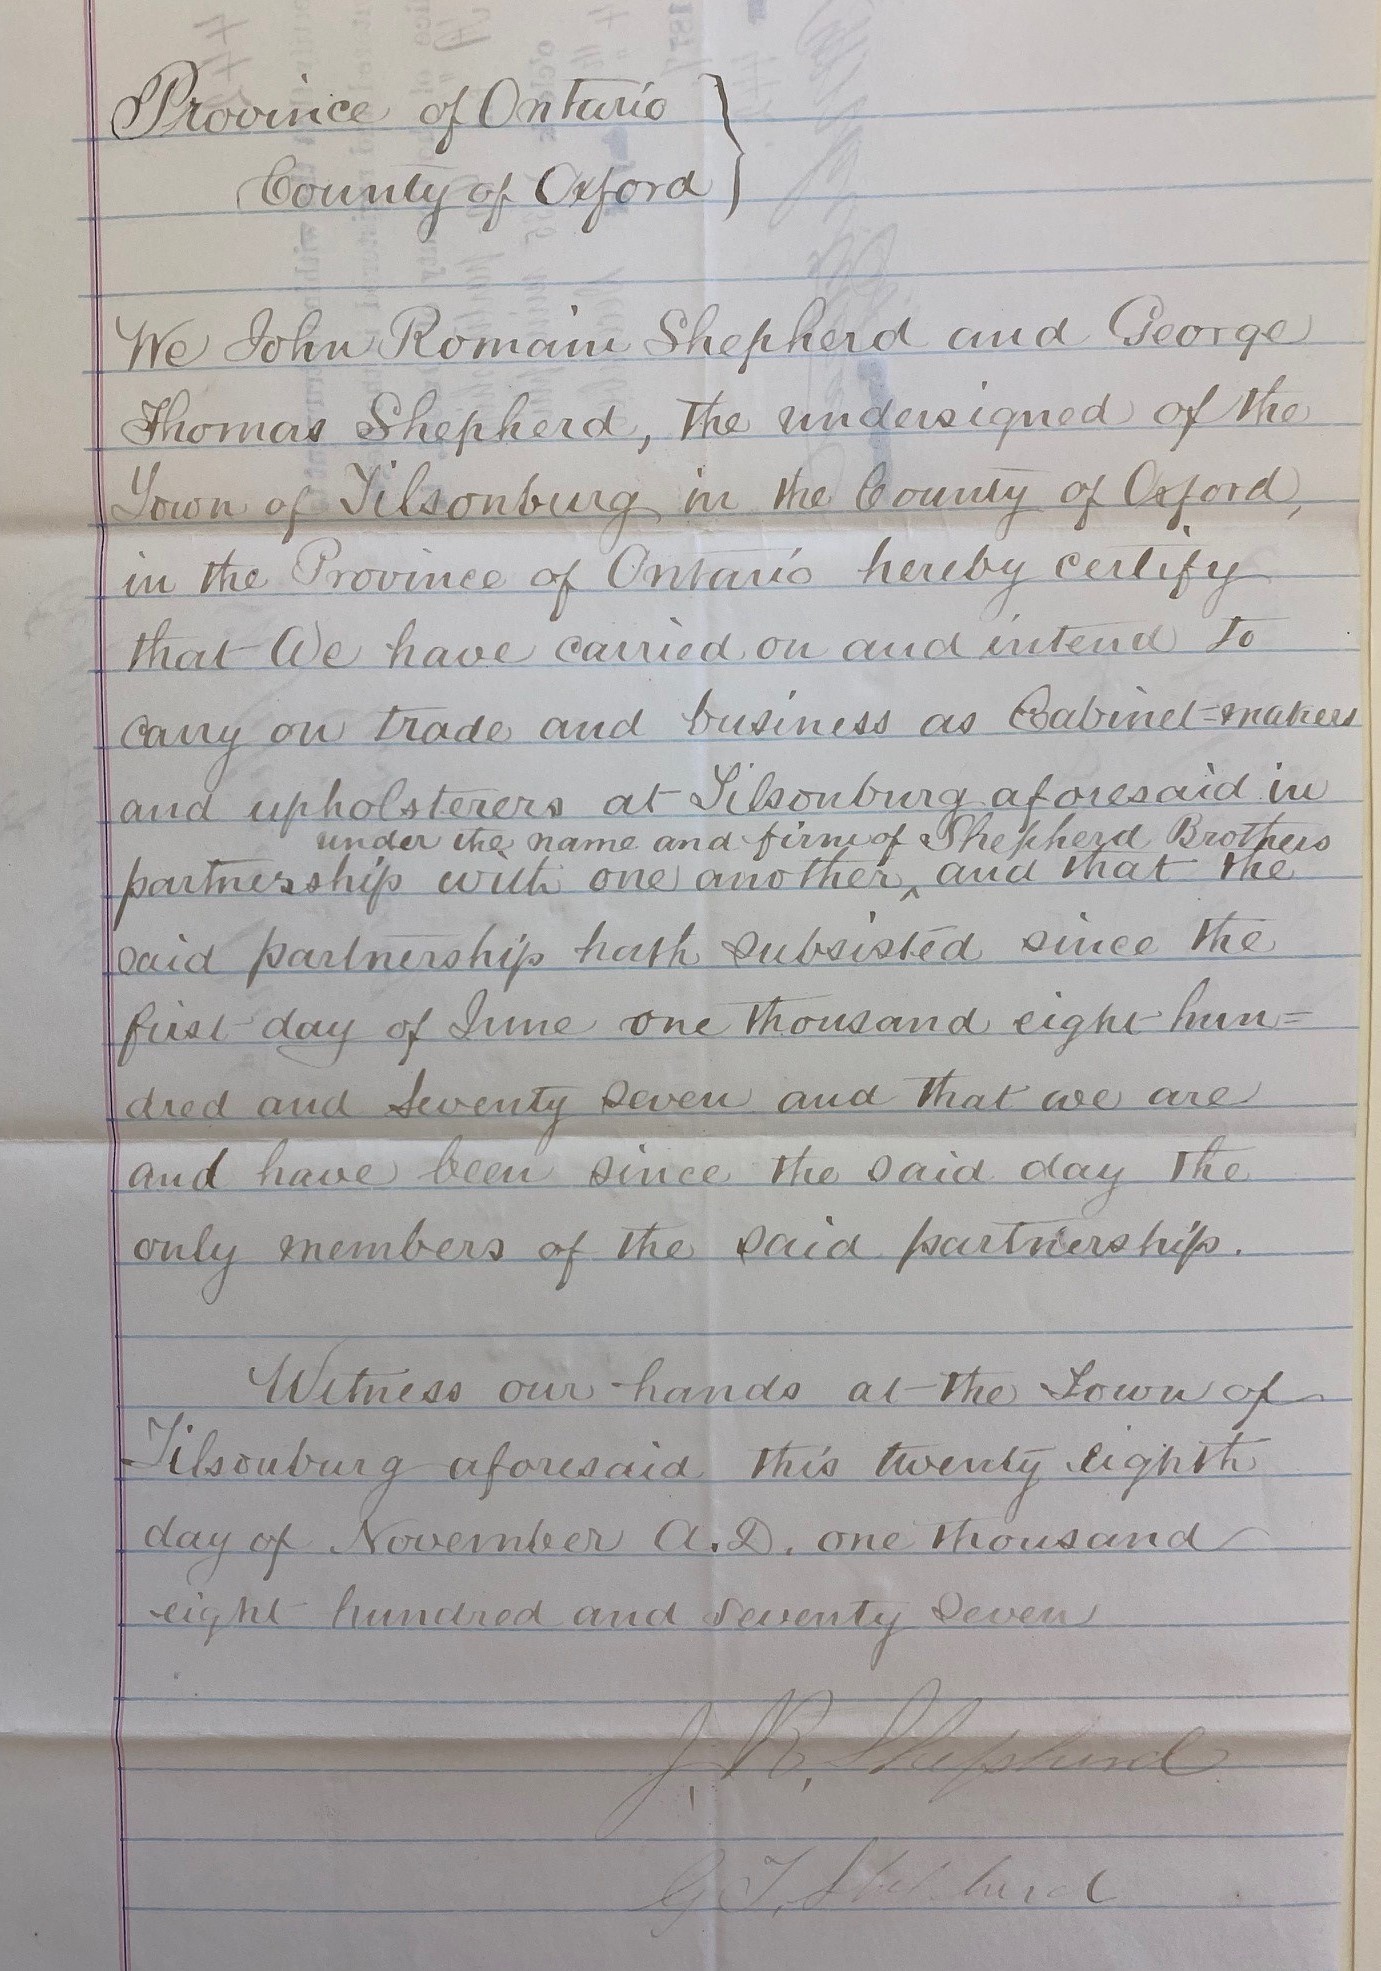 A handwritten declaration of partnership between John Shepherd and George Shepherd in the Town of Tillsonburg.